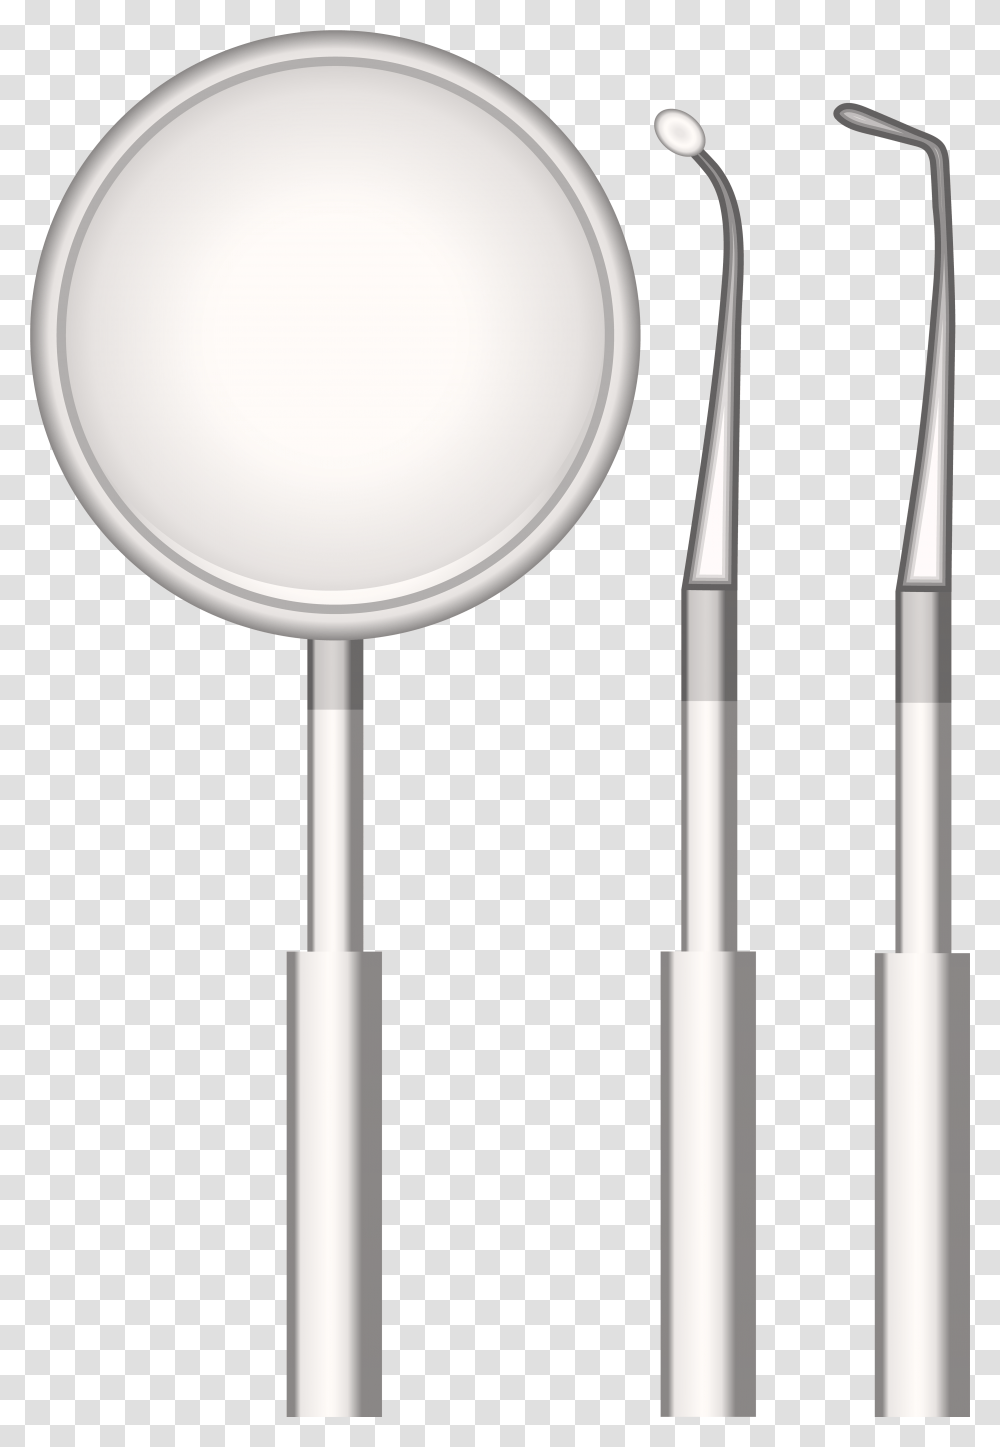 Dental Instruments Clip Art Street Light, Lamp, Magnifying, Racket, Cutlery Transparent Png